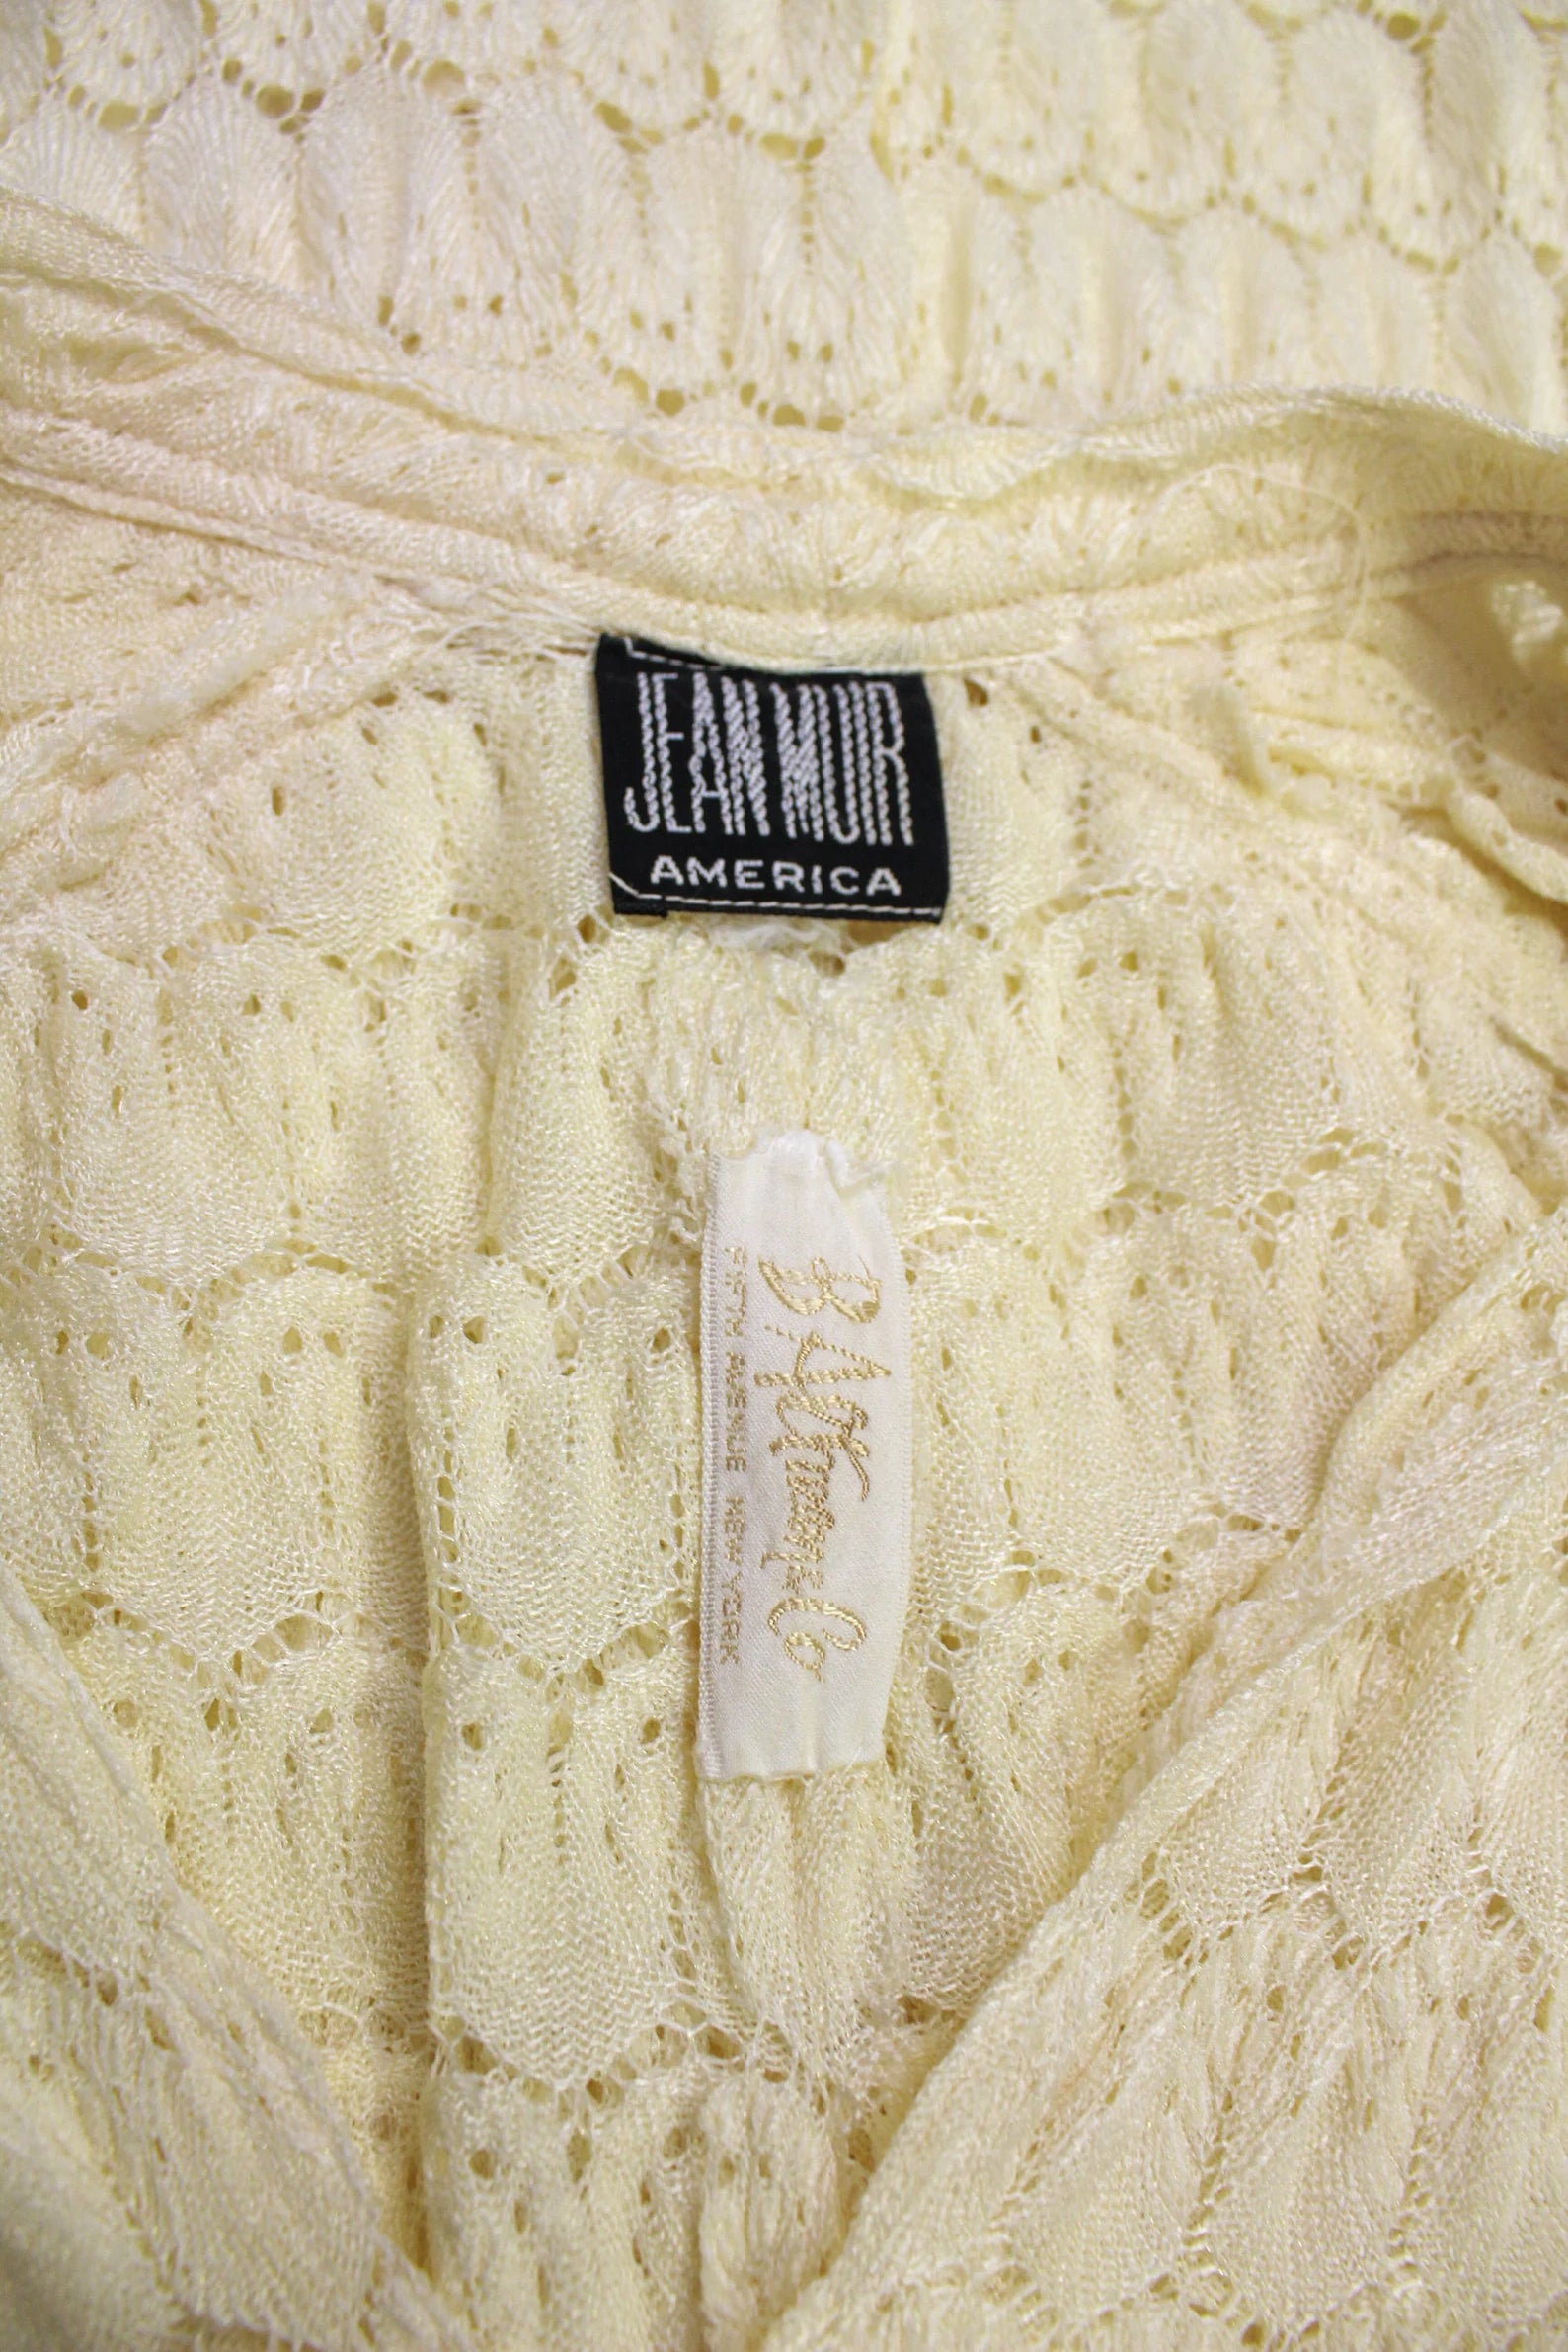 80s Rare Jean Muir Cream Knit Crochet Maxi Dress, Bishop Sleeves, Tie Neck, Vintage Jean Muir Designer Dress, B36.